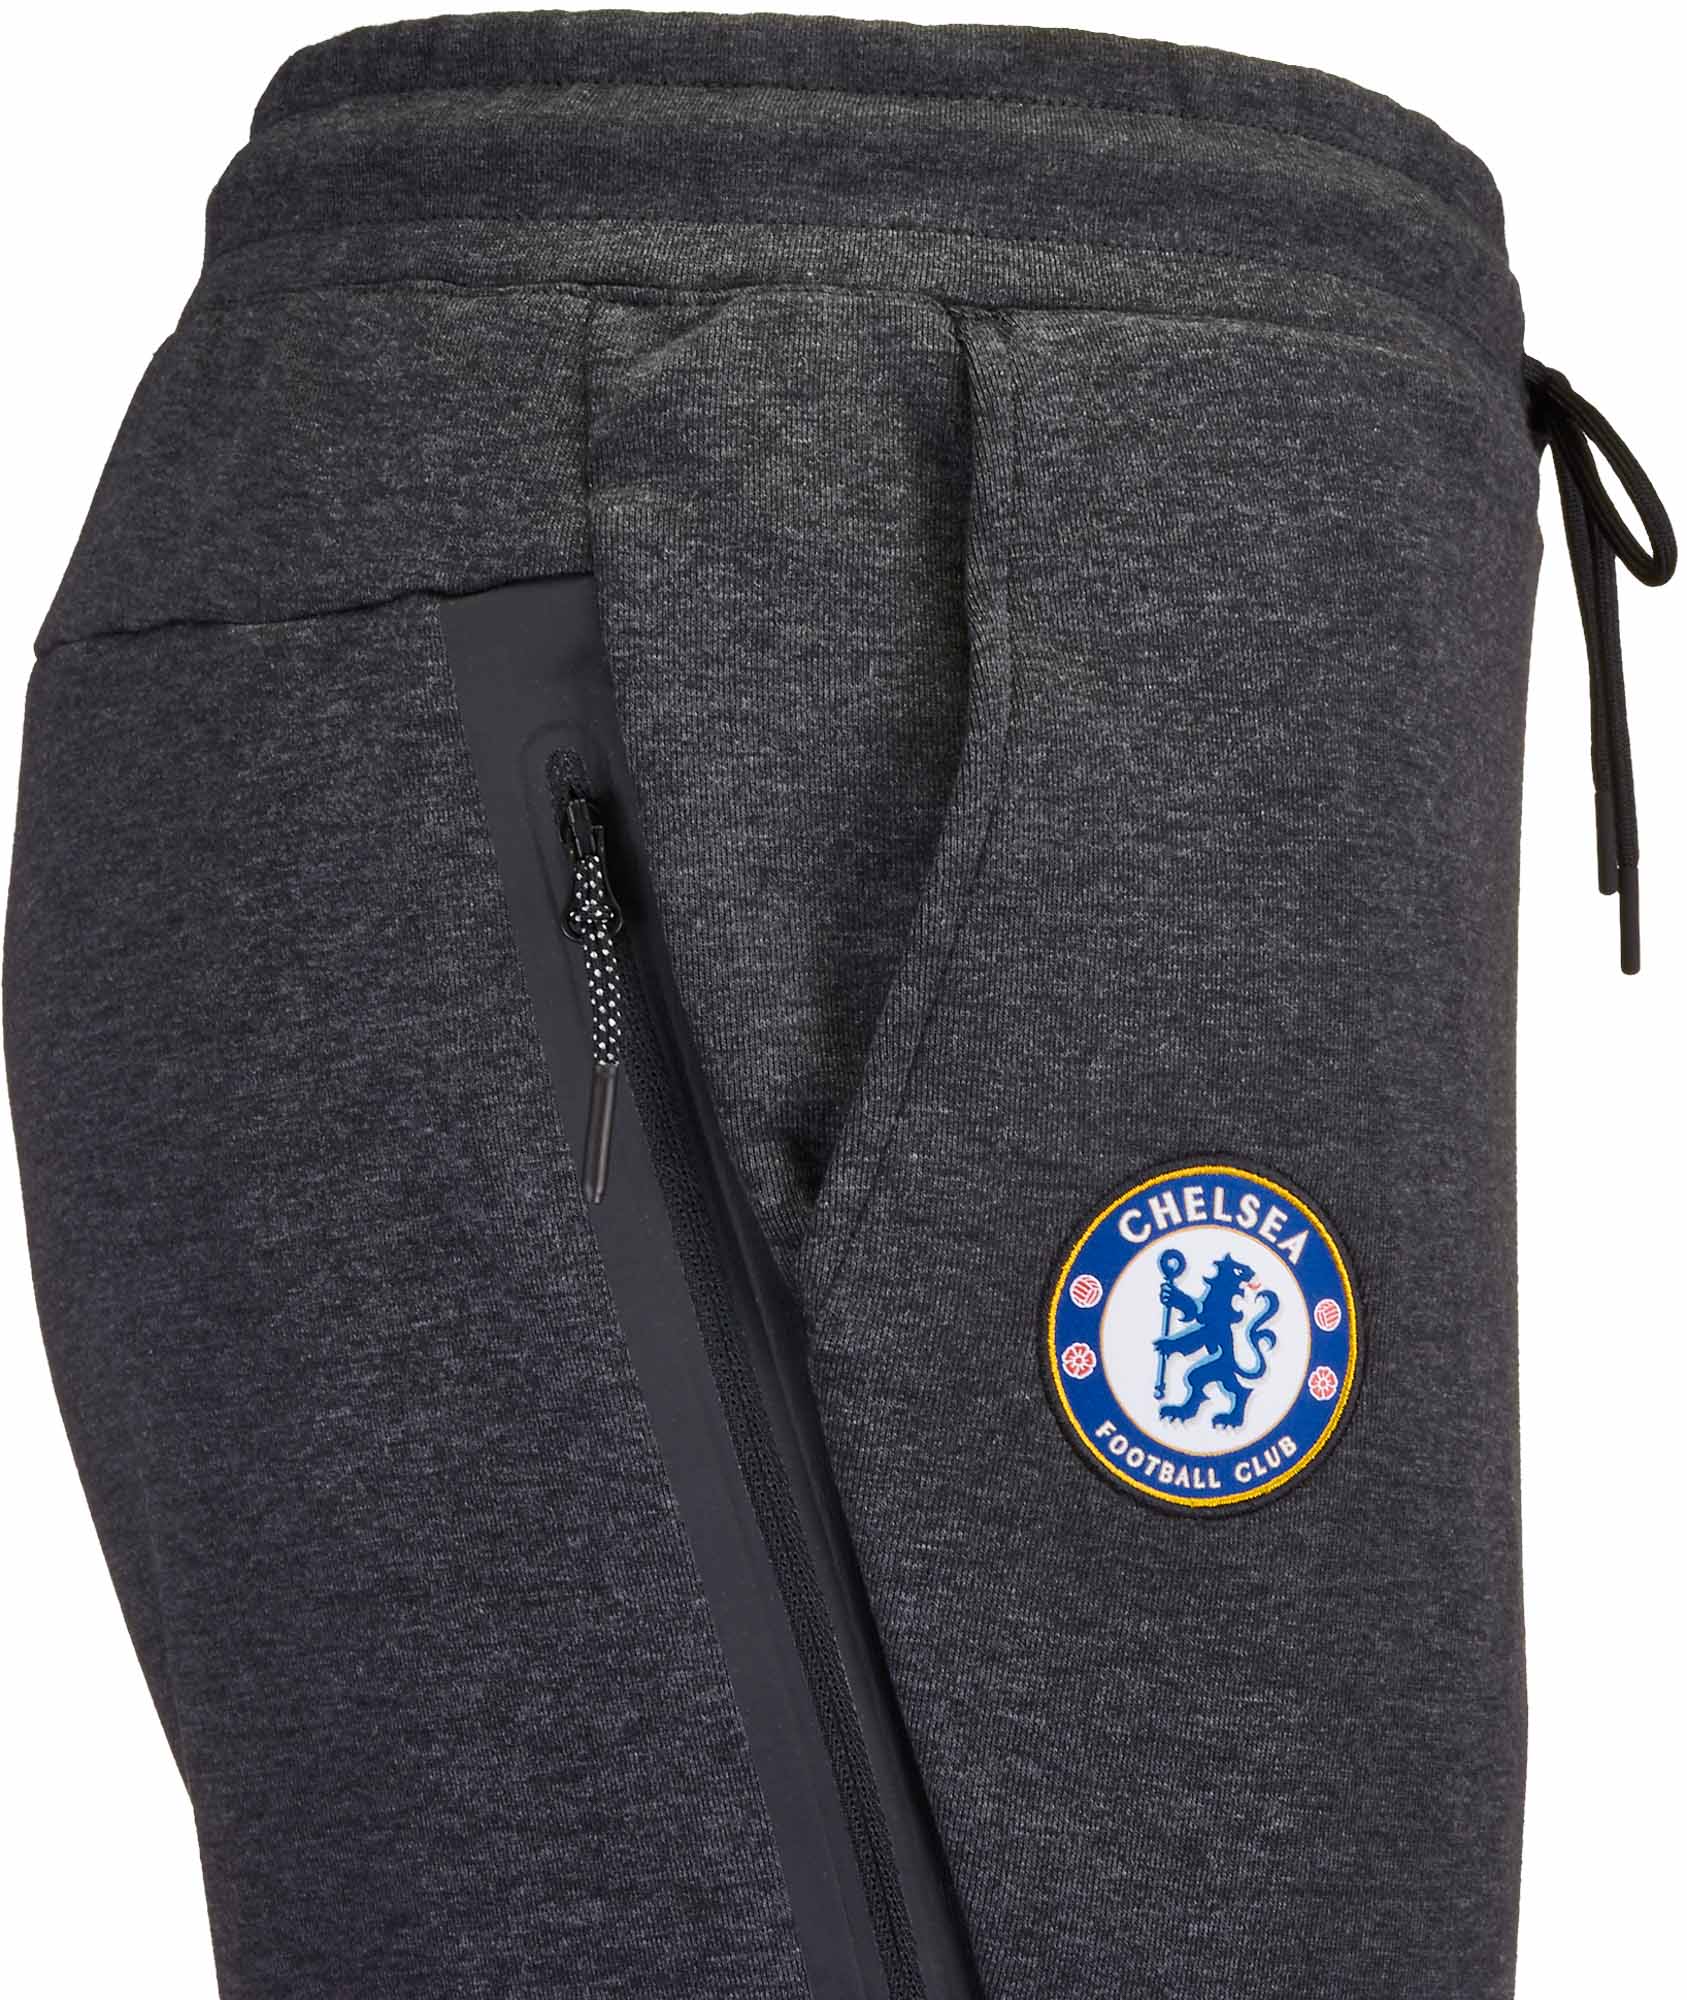 Whitney recorder Brig Nike Chelsea FC Tech Fleece Jogger Pants - Soccer Pants